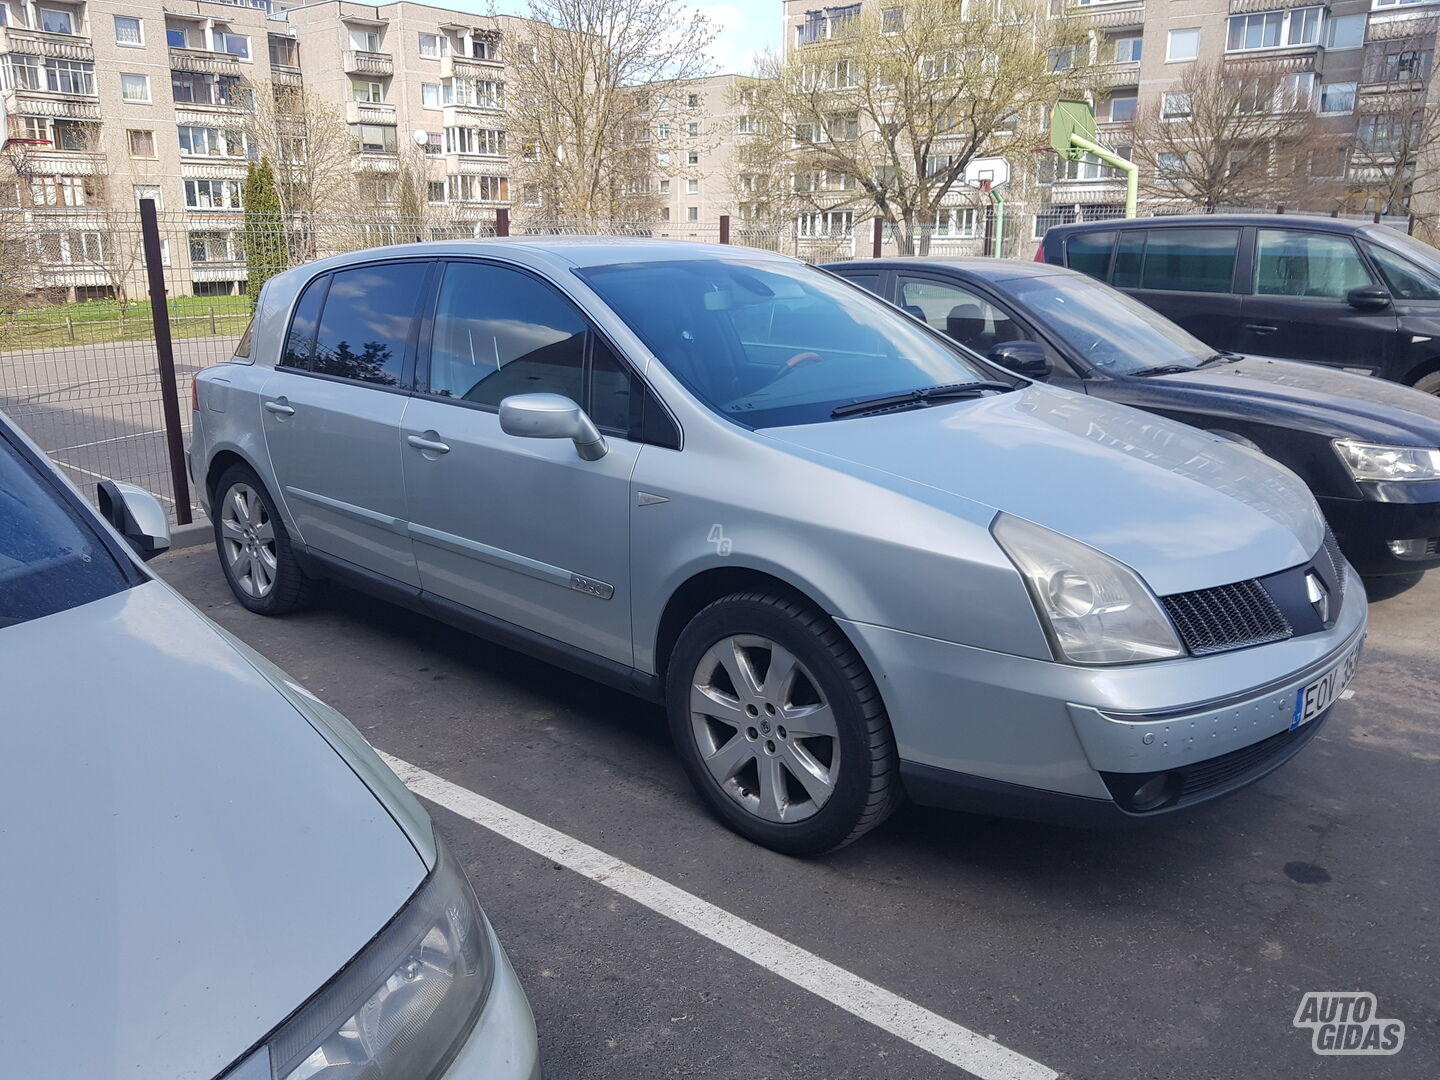 Renault Vel Satis cdi 2003 m dalys